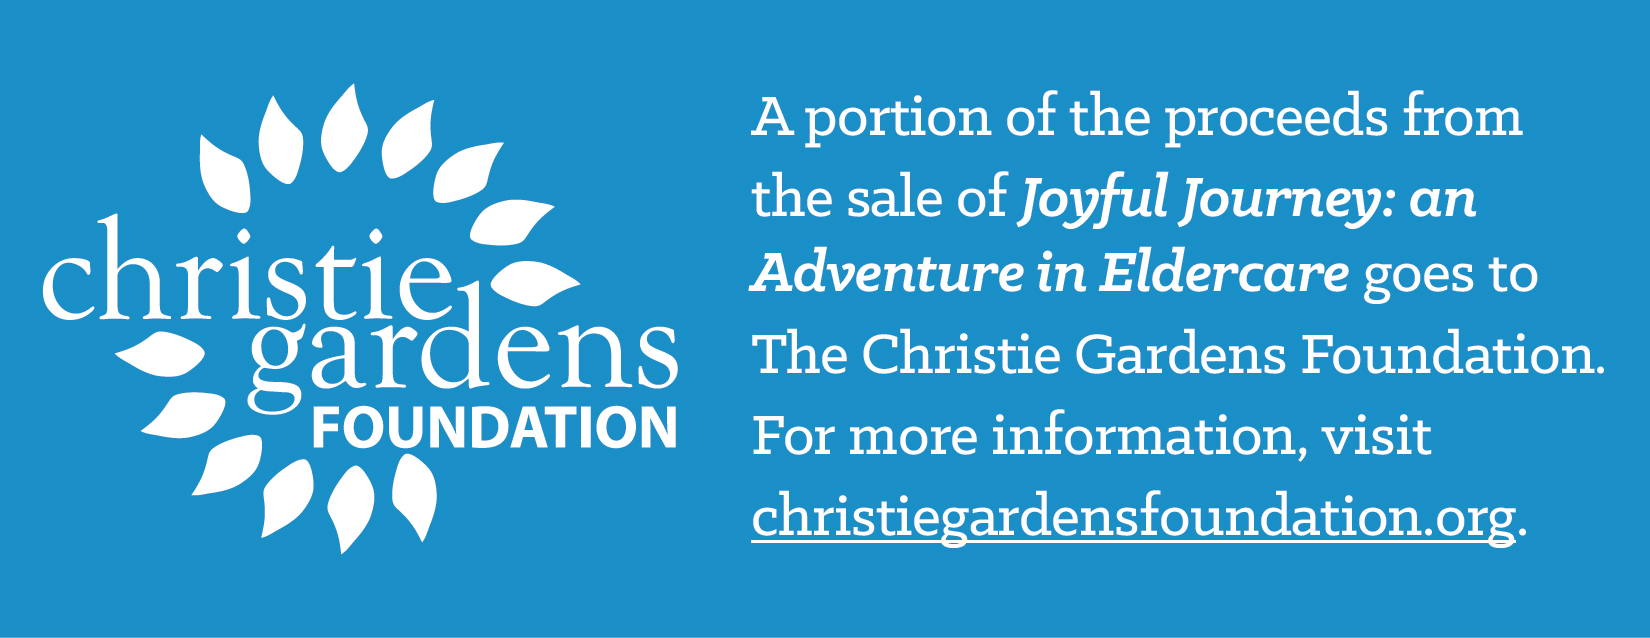 The Christie Gardens Foundation